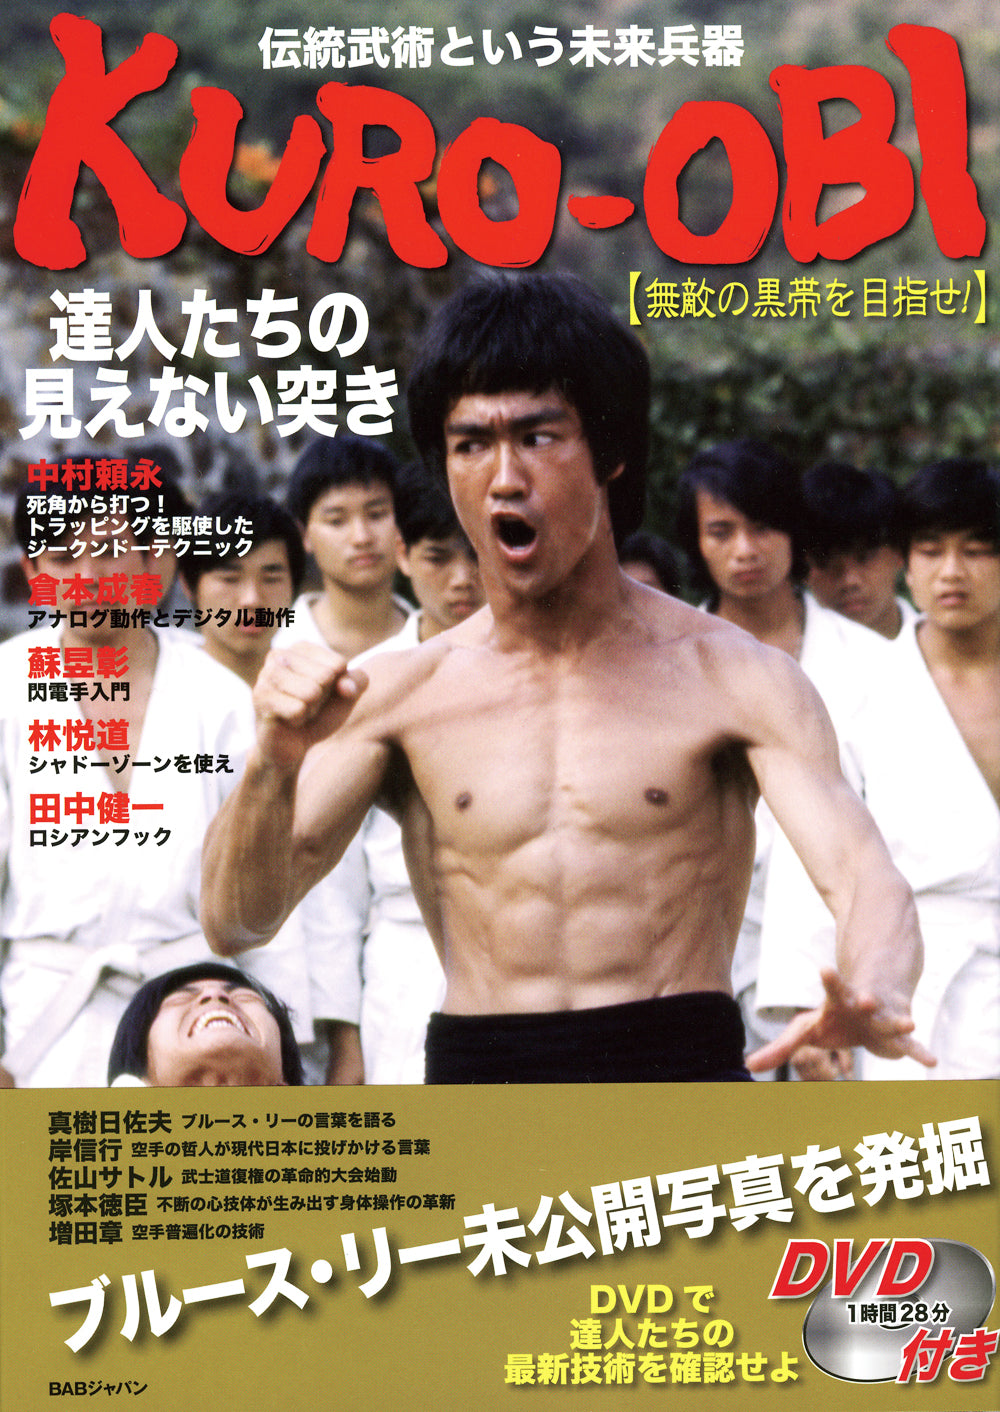 Revista Kuro Obi y DVD n.° 1 